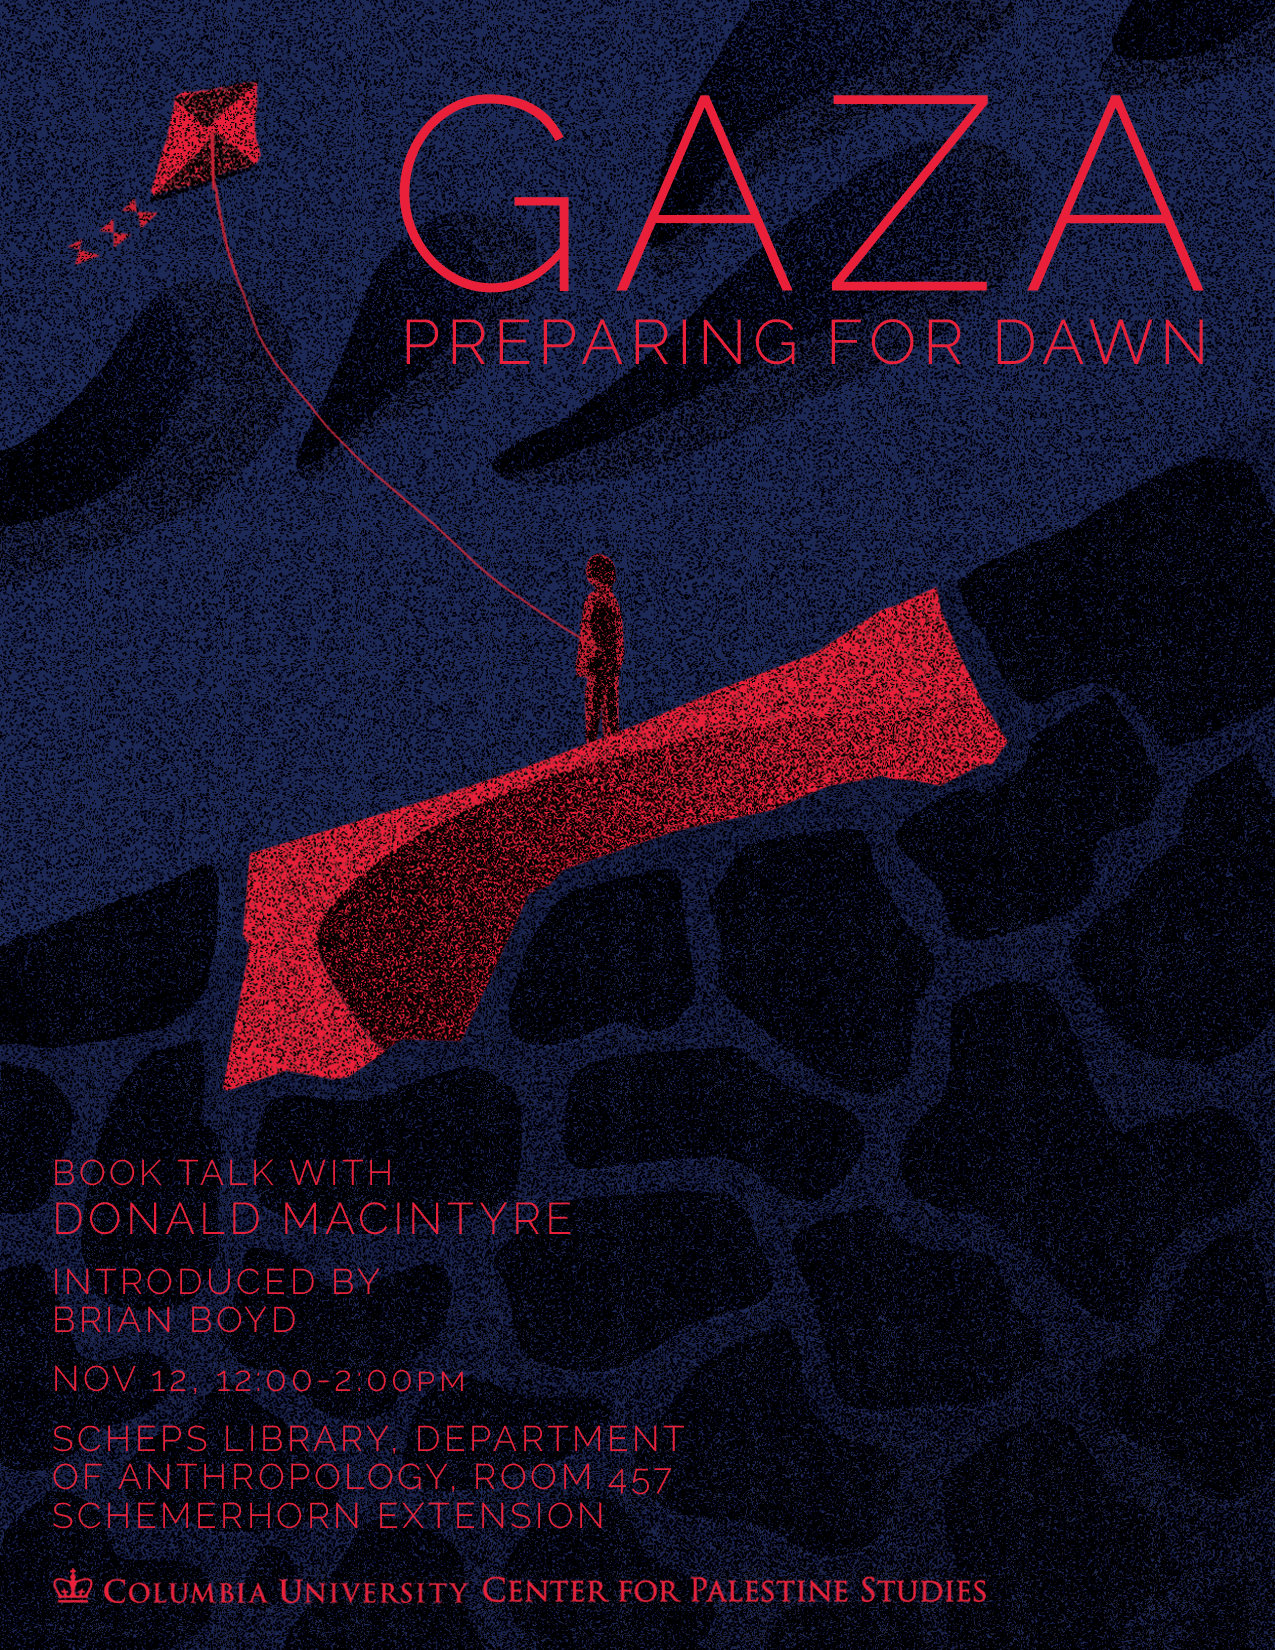 GAZA, Preparing for the Dawn